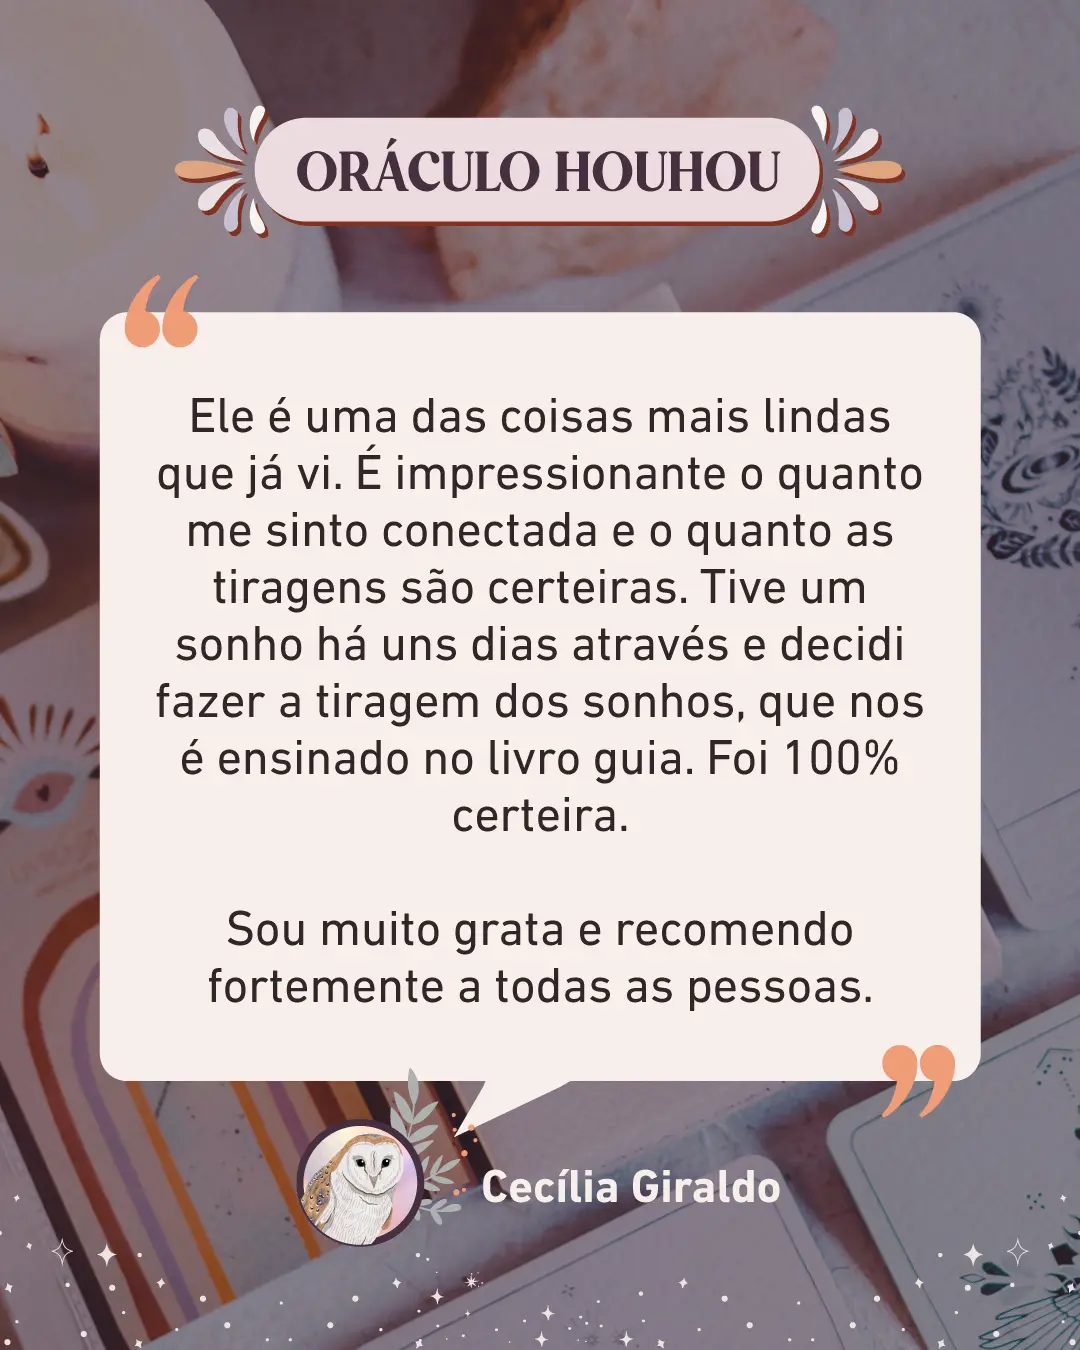 Oráculo - Houhou